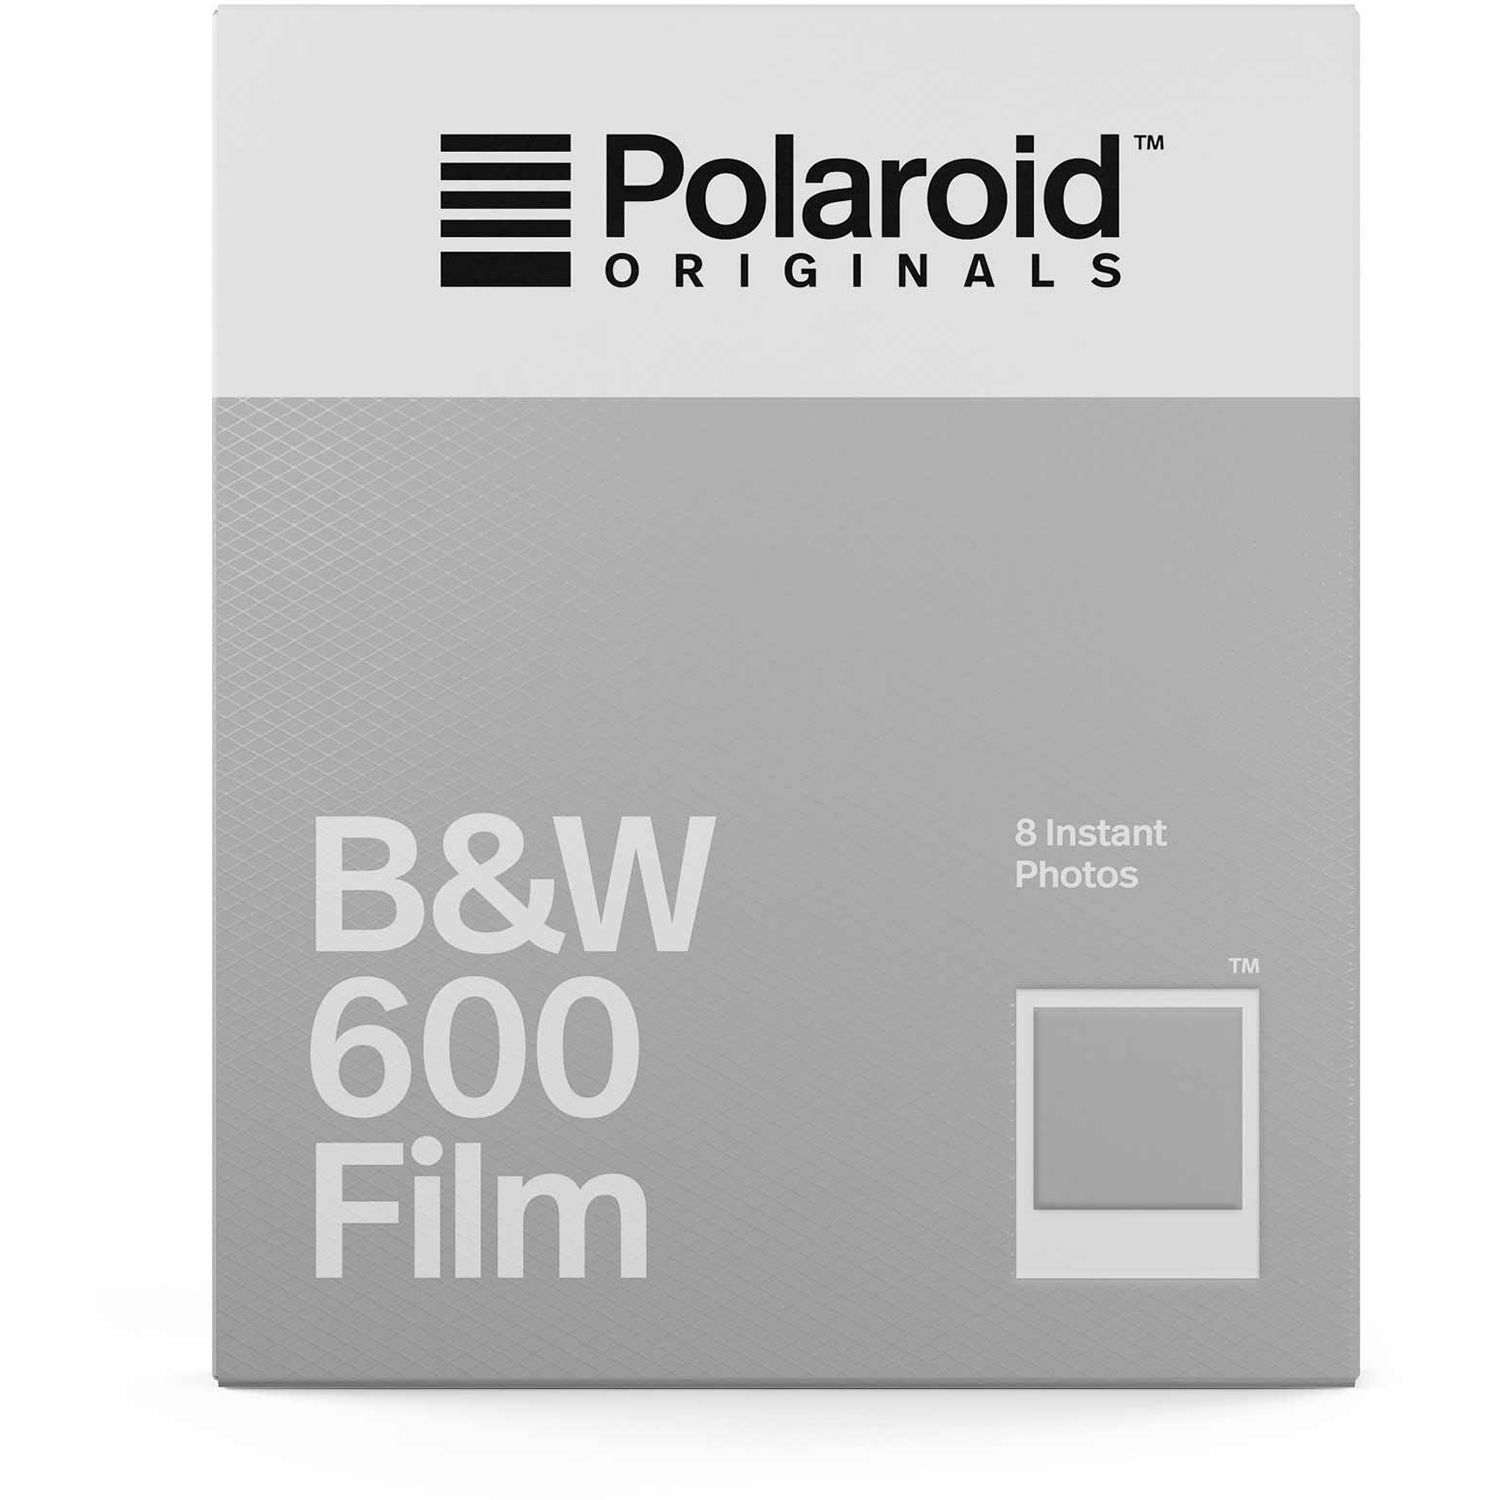 Polaroid Originals B&W Film for 600 Cameras papir za crno-bijele fotografije za Instant fotoaparate (004671)